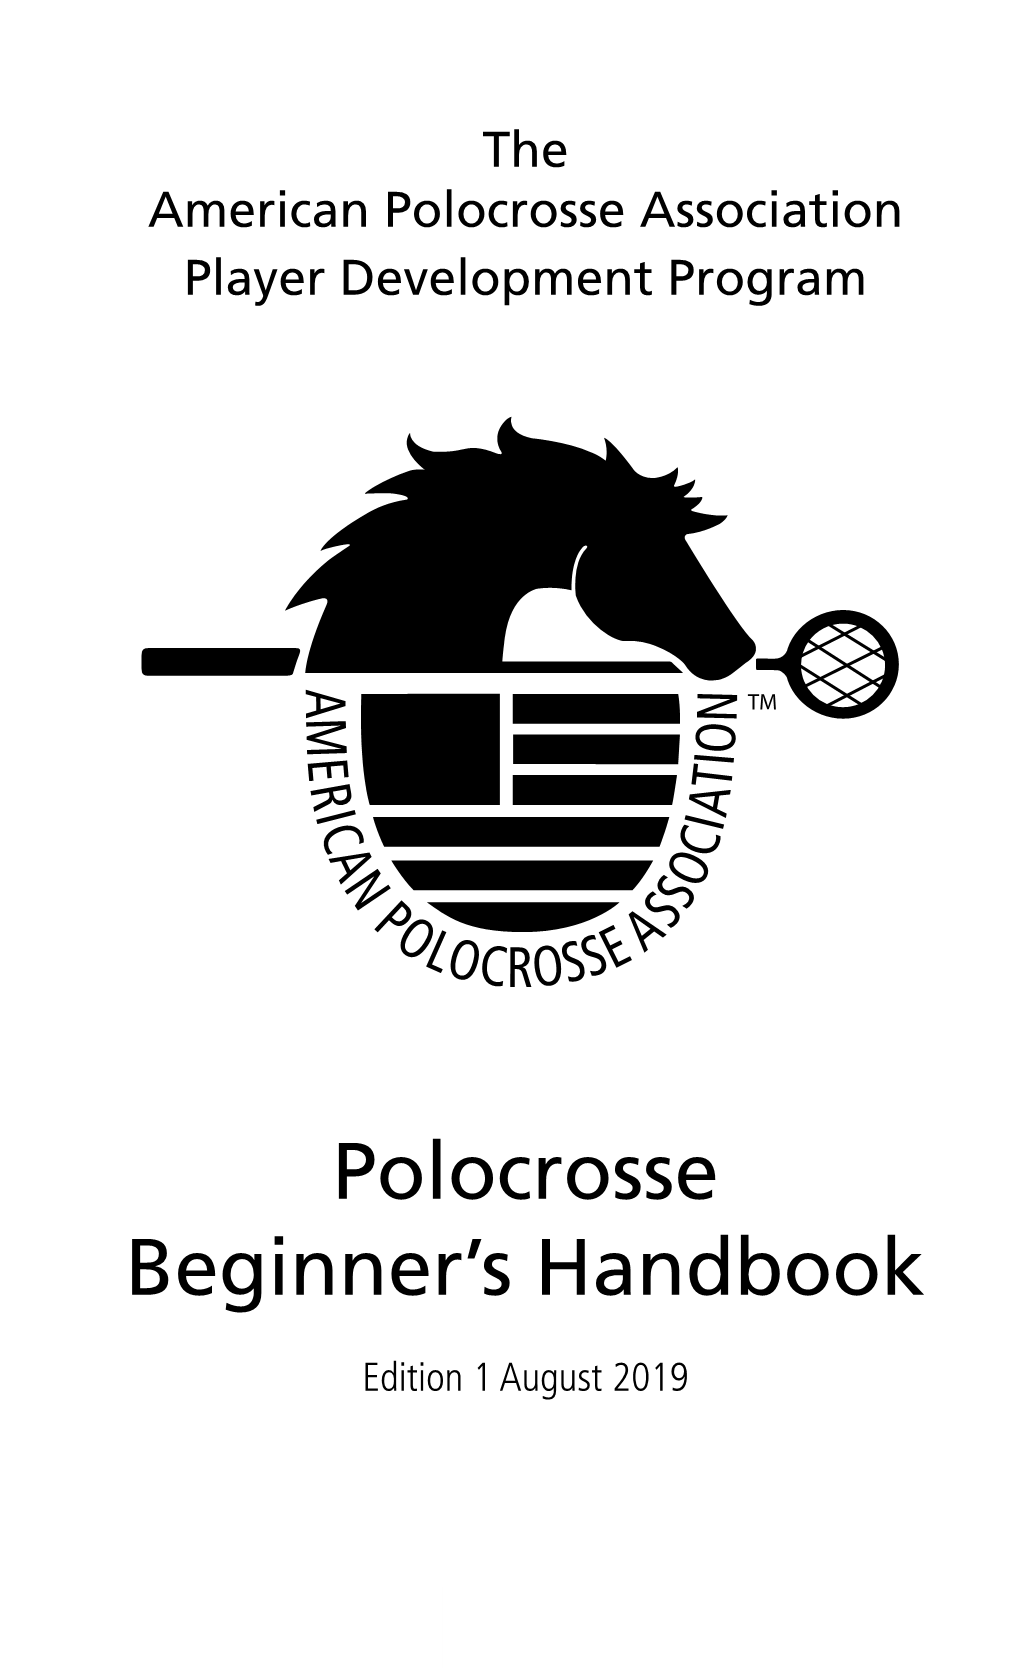 Polocrosse Beginner's Handbook